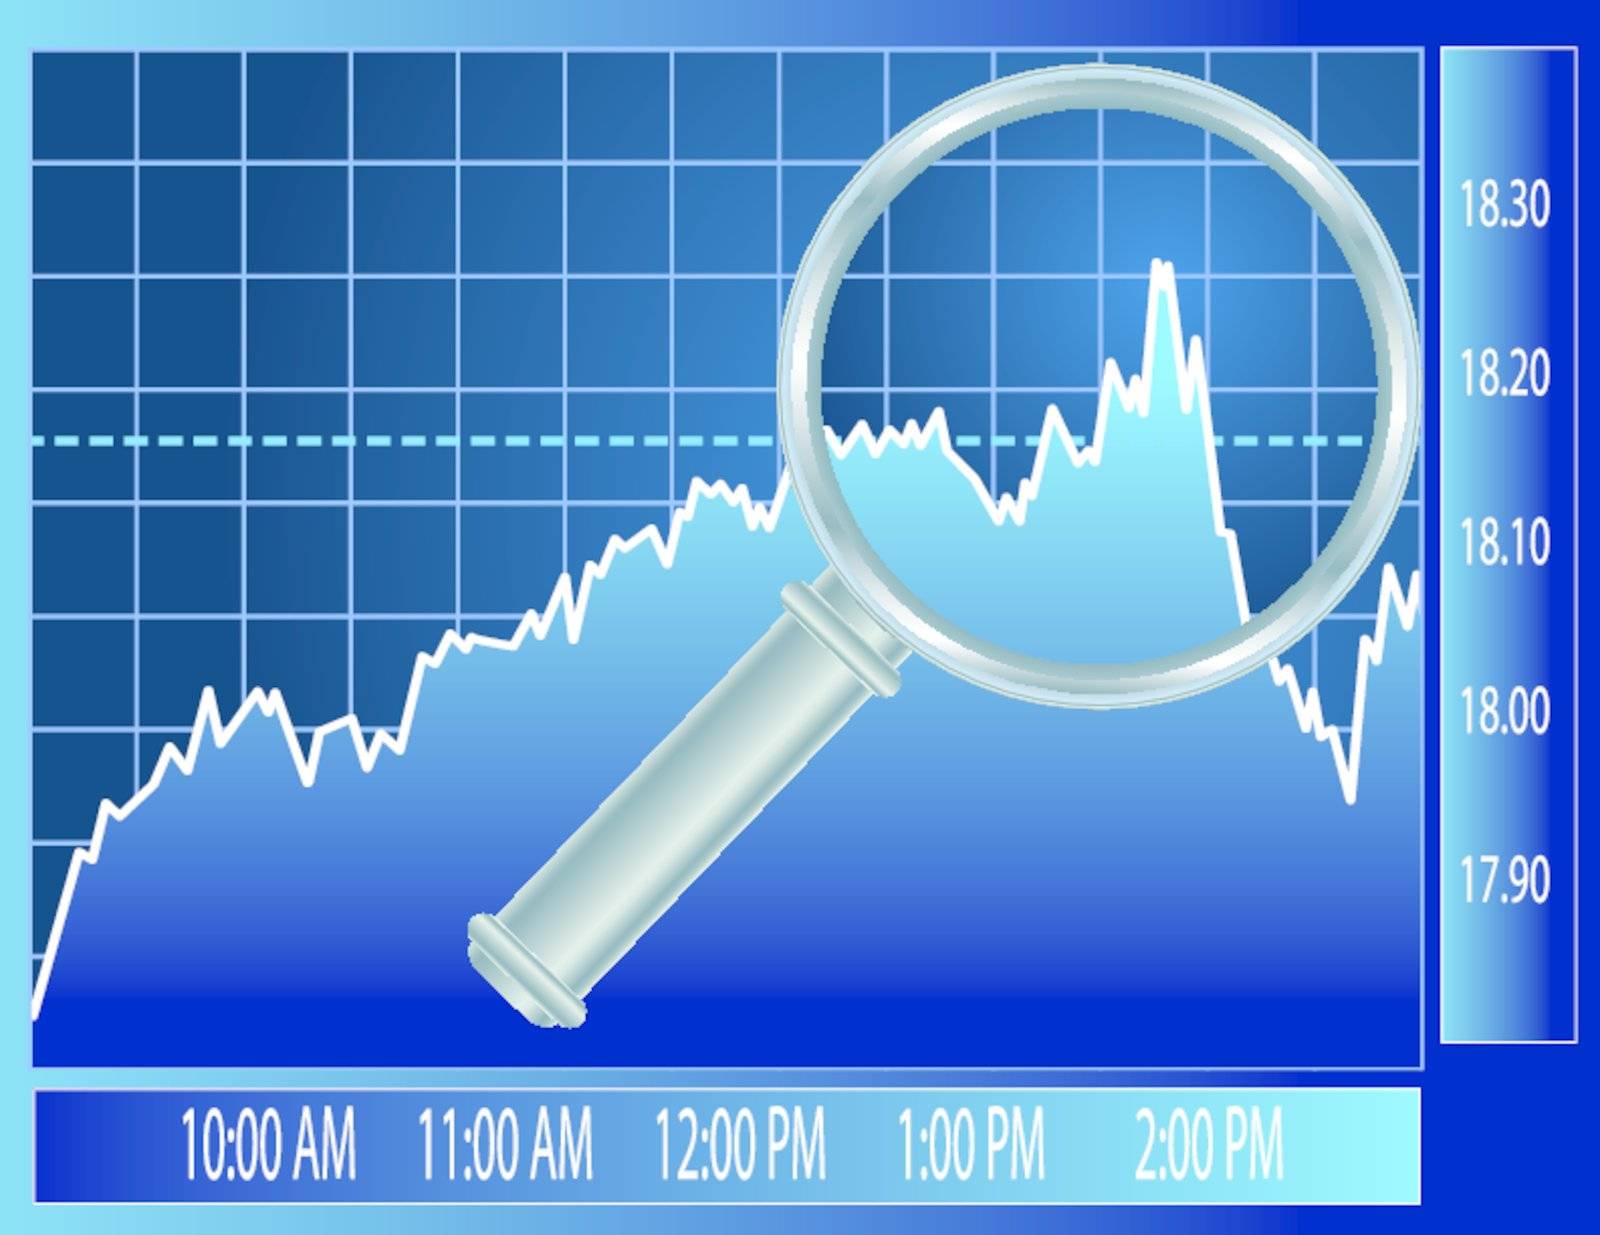 Stock market trend under magnifier glass. Finance concept illustration.